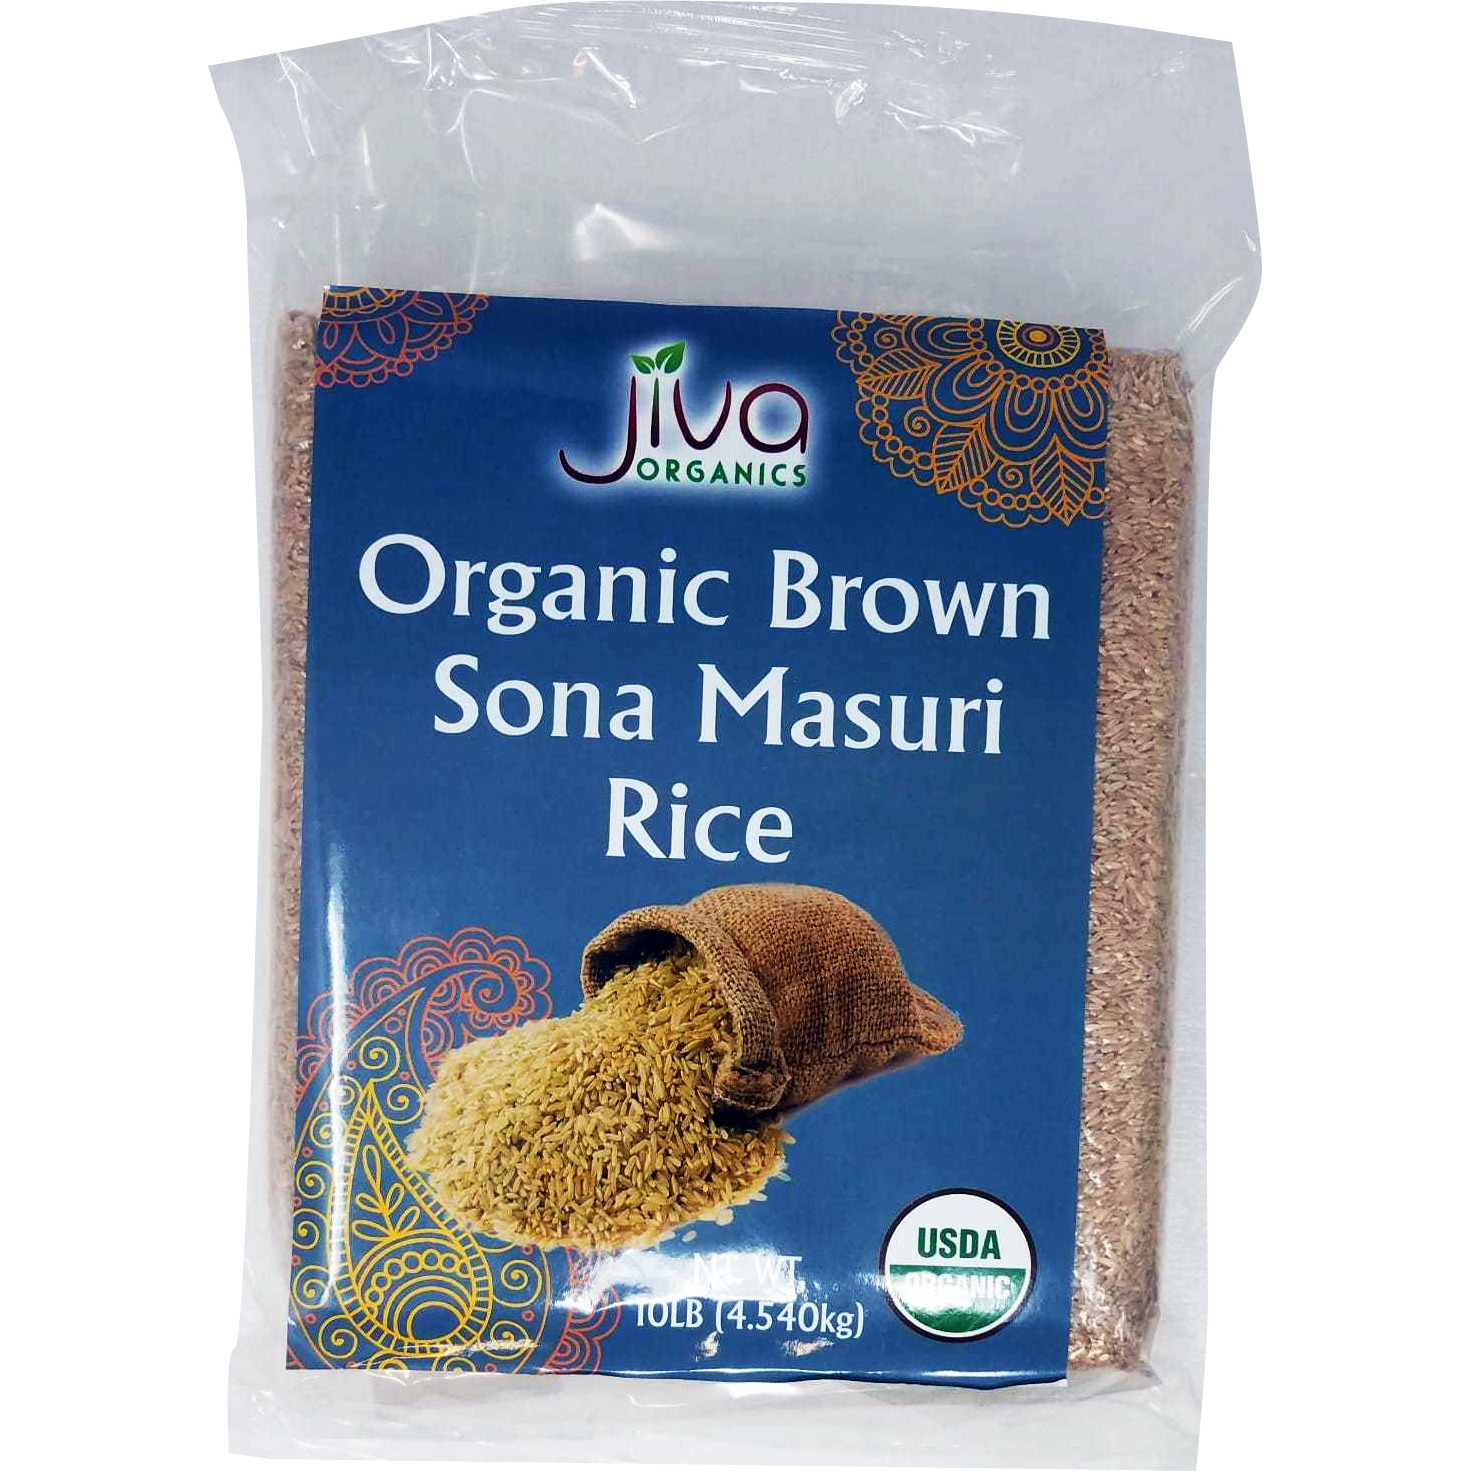 Case of 4 - Jiva Organics Organic Brown Sona Masuri Rice - 10 Lb (4.5 Kg) [50% Off]